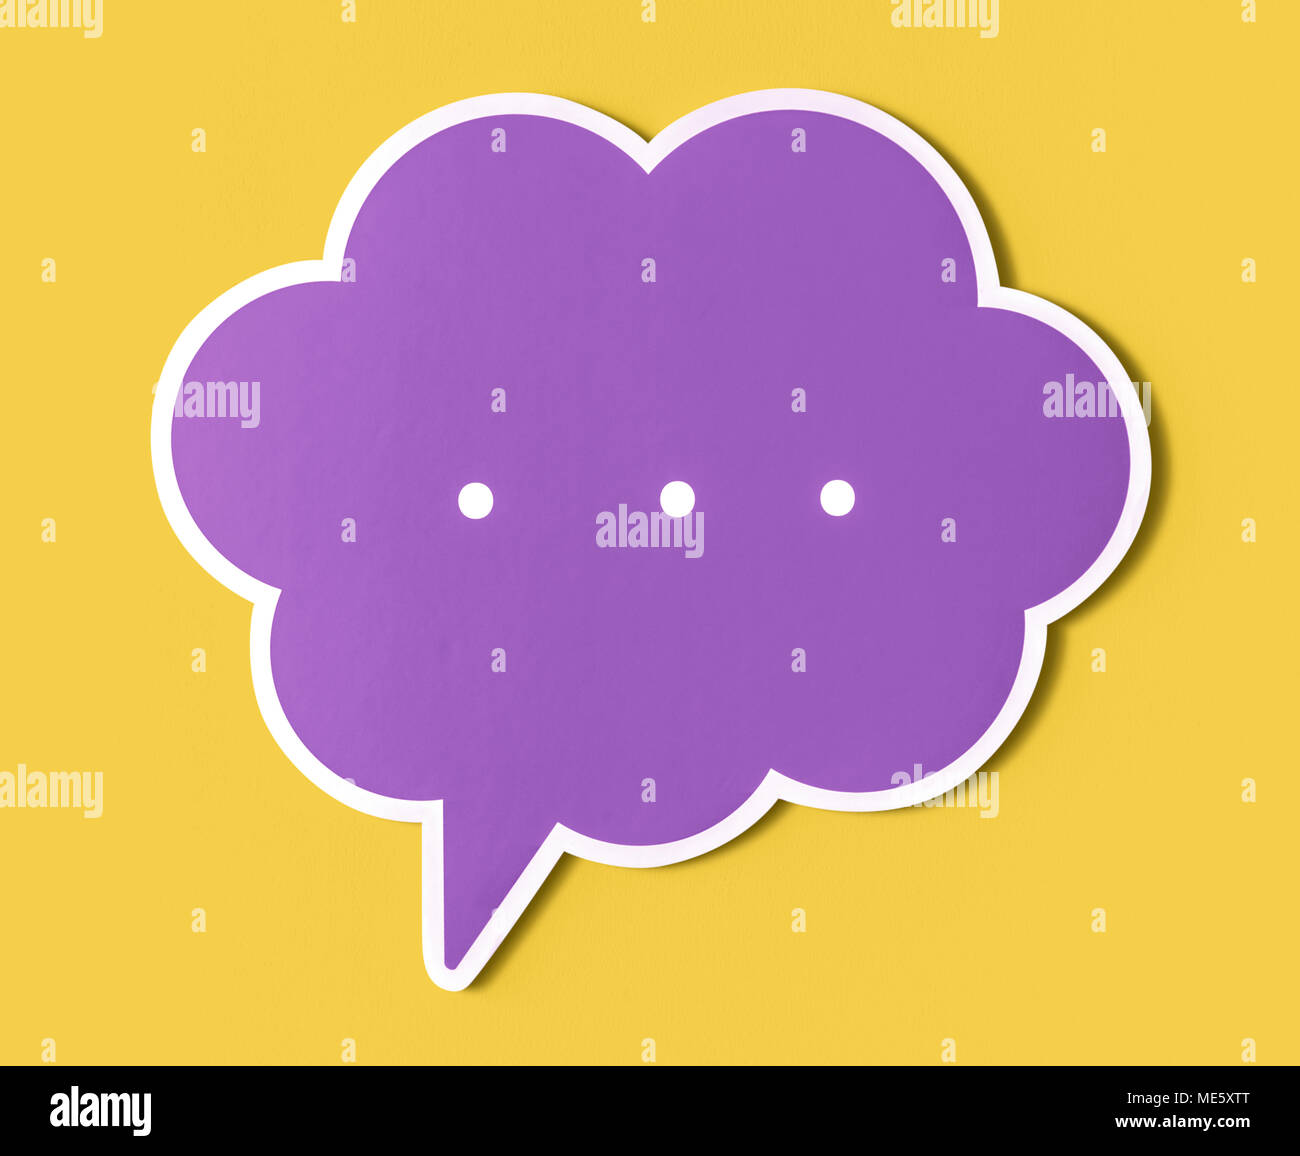 Conversation speech bubble cut out icon Stock Photo